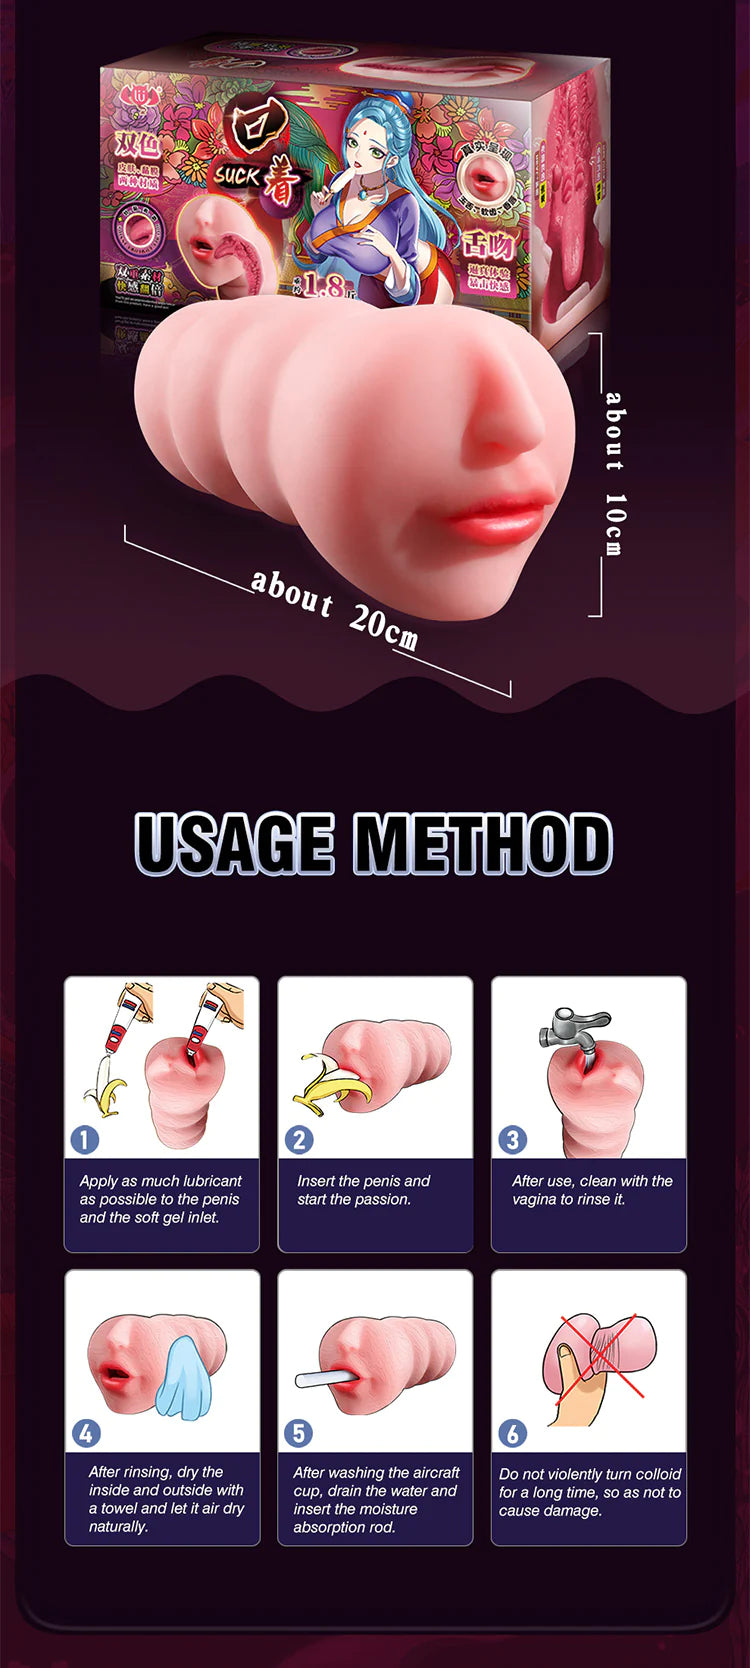 Realistic Male Masturbator for Blowjob, Light-Colored Skin Face Design Oral Sex Toy Stroker Pocket Pussy for Masturbation19